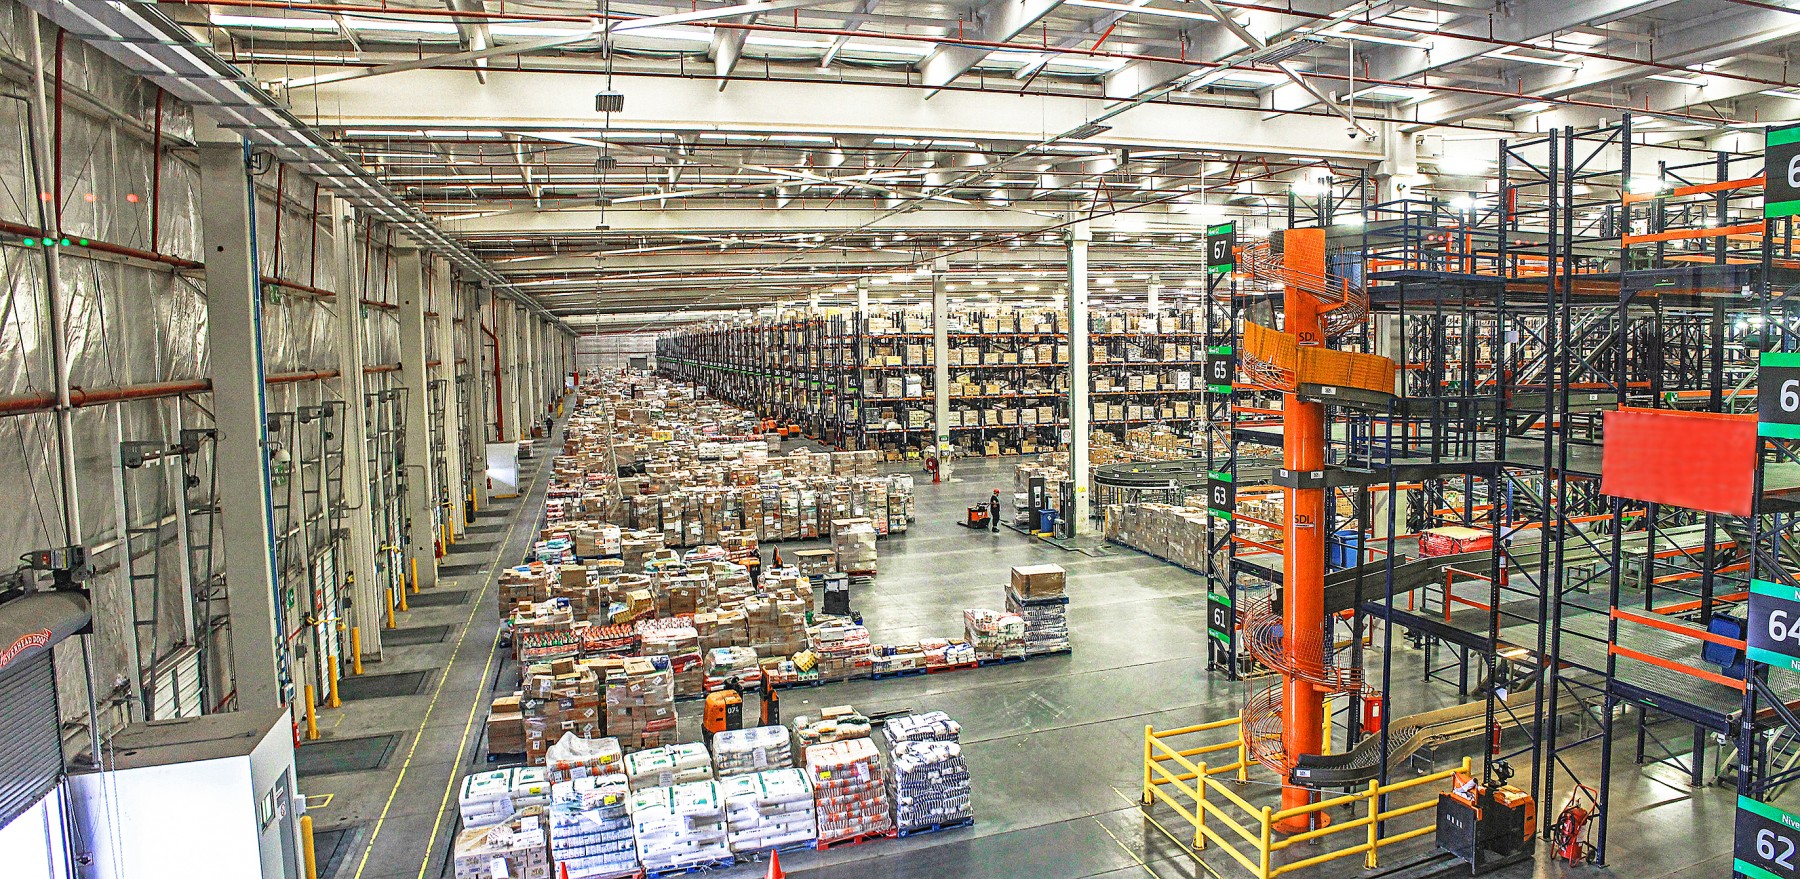 barn-factory-warehouse-manufacturing-distribution-logistics-663063-pxhere.com